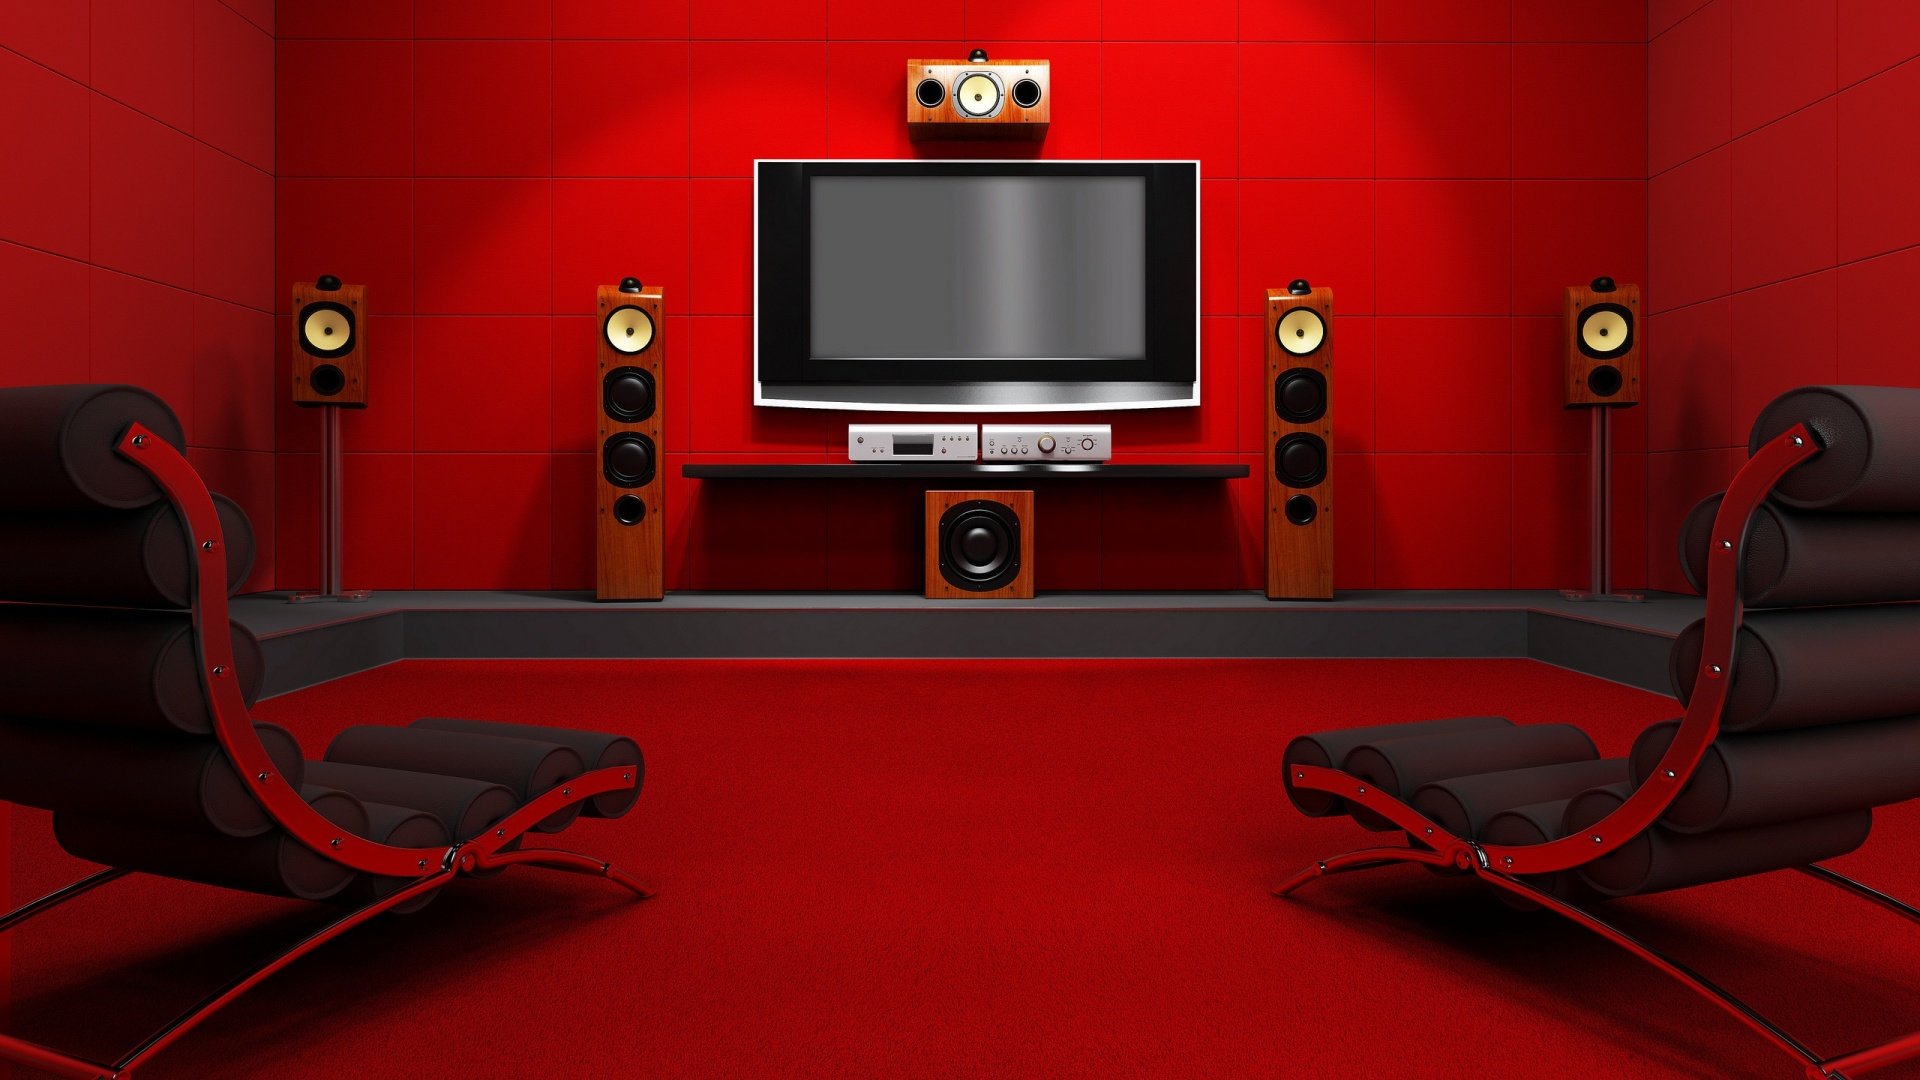 1920x1080 Red Room desktop PC and Mac wallpaper 1920x1080